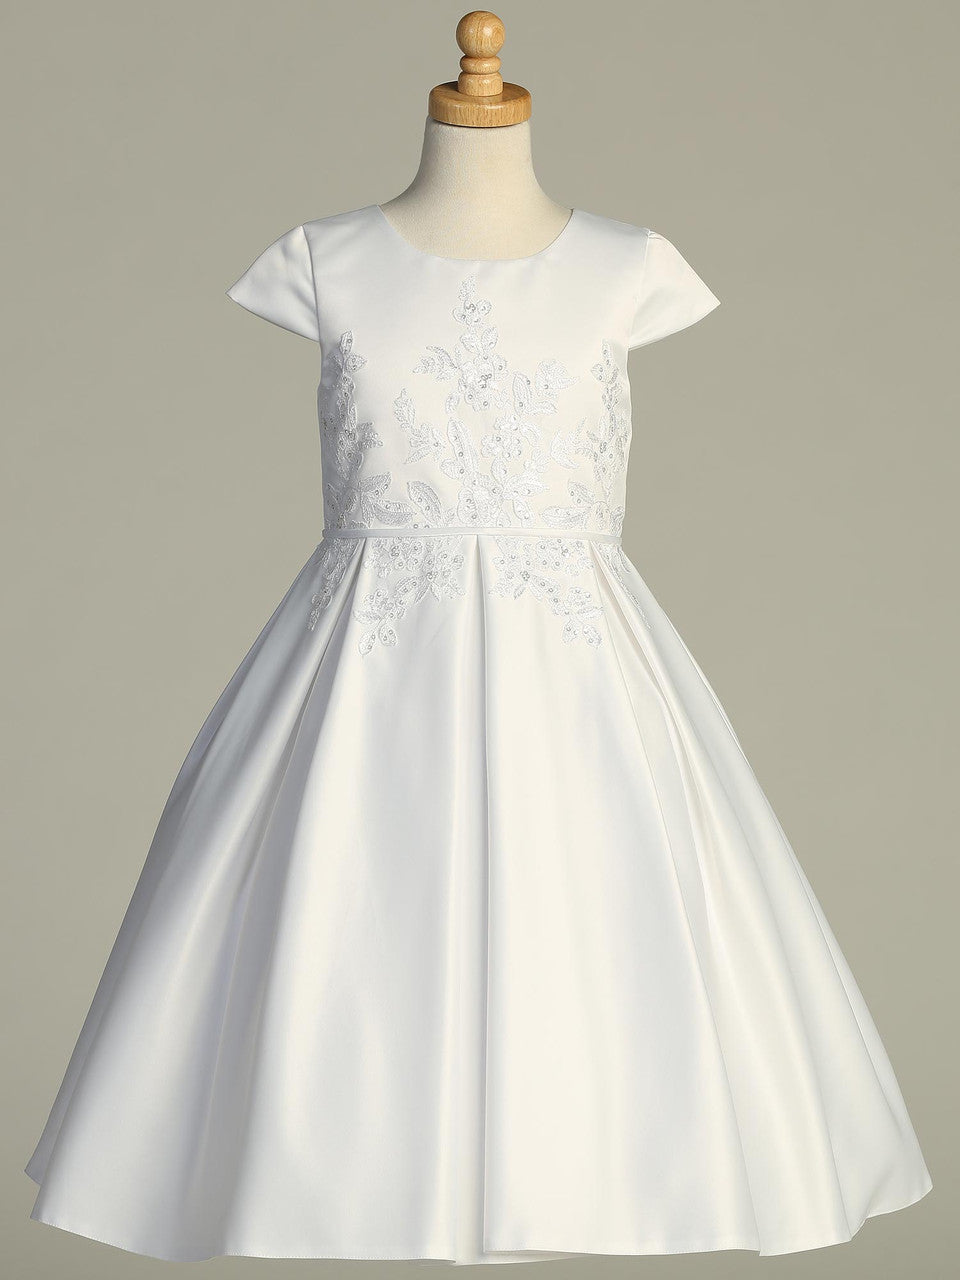 White Satin Dress SP 735